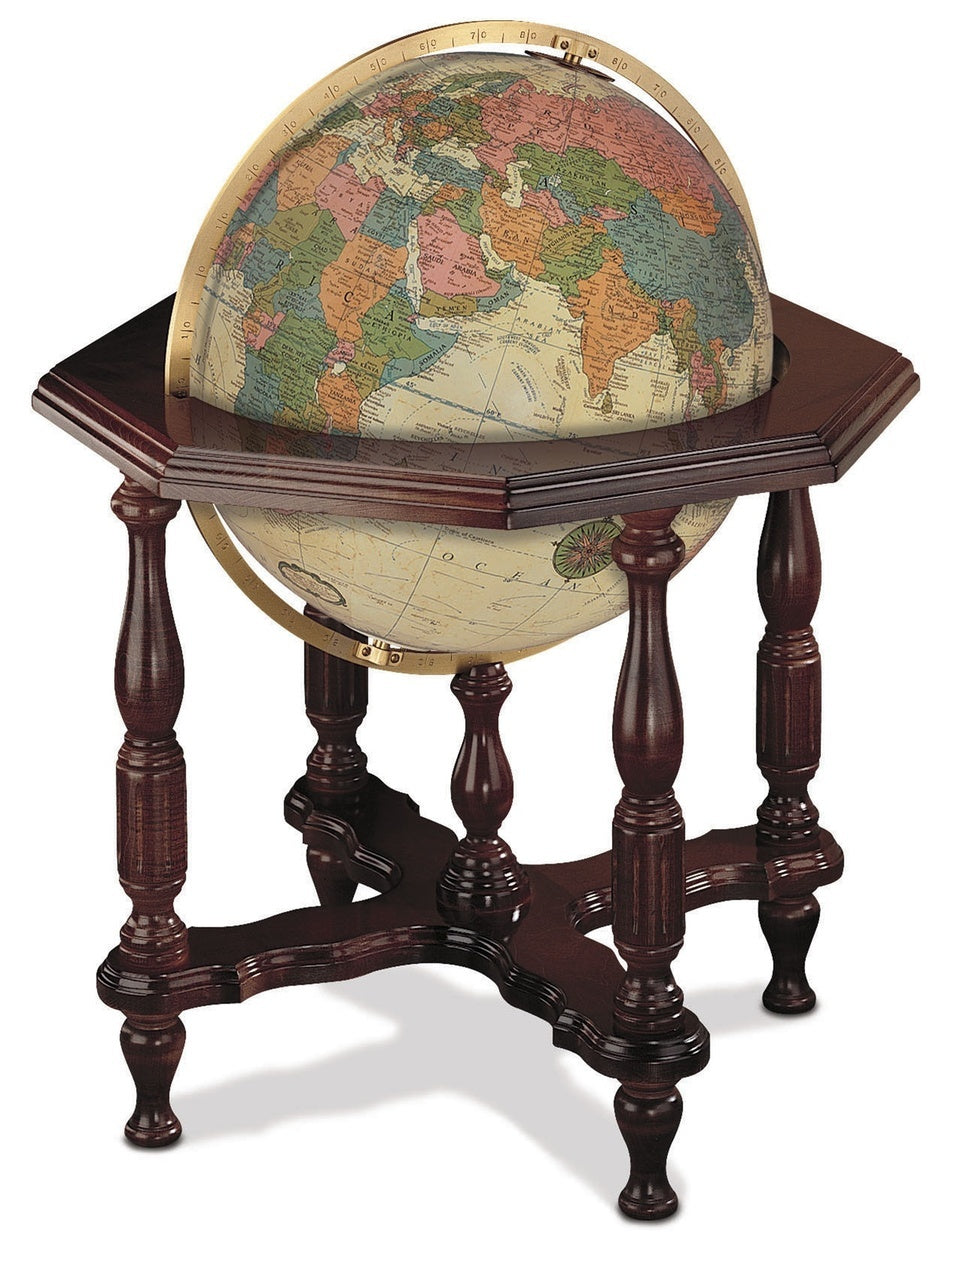 Statesman Antique Illuminated 20 Inch Floor World Globe By Replogle Globes